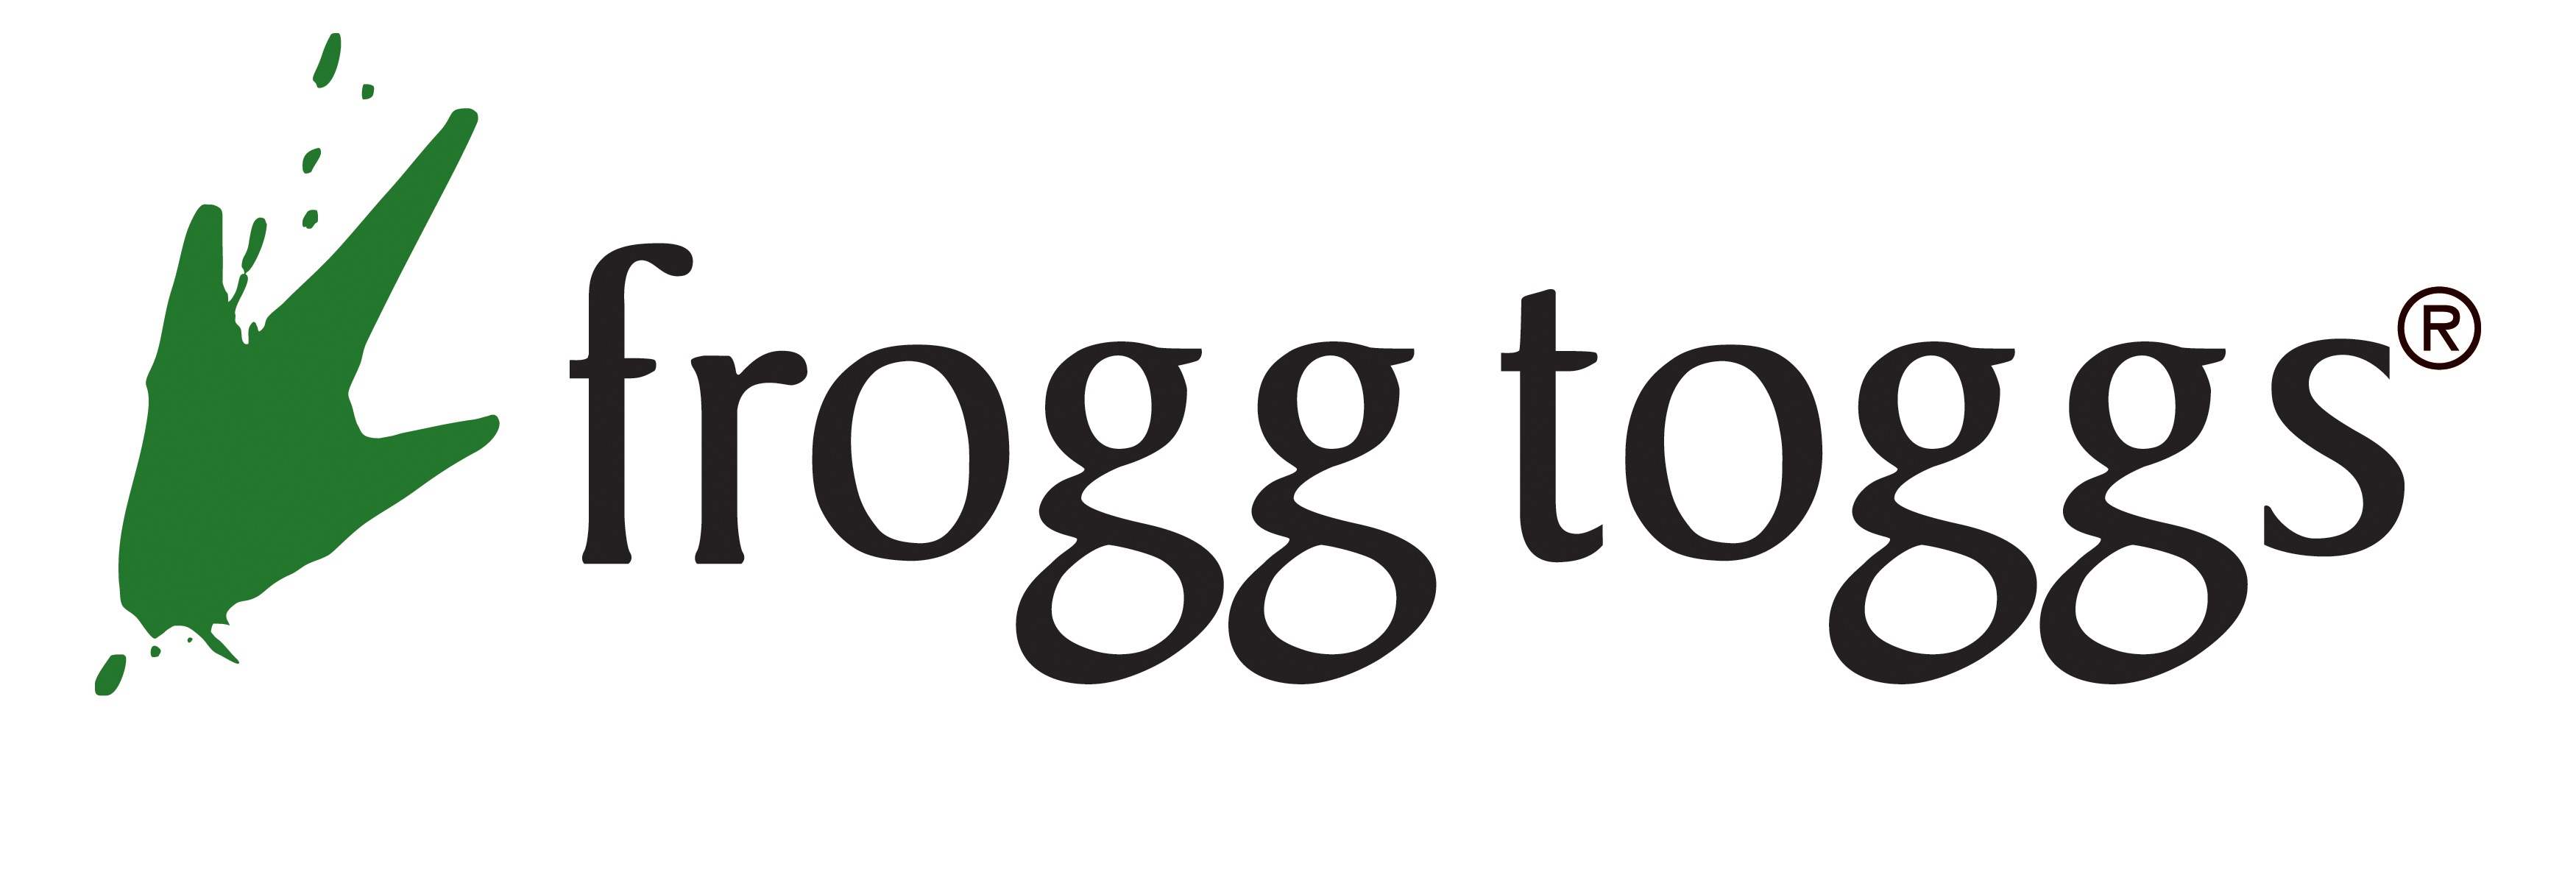 froggtoggs-logo-whitebackground1.jpg